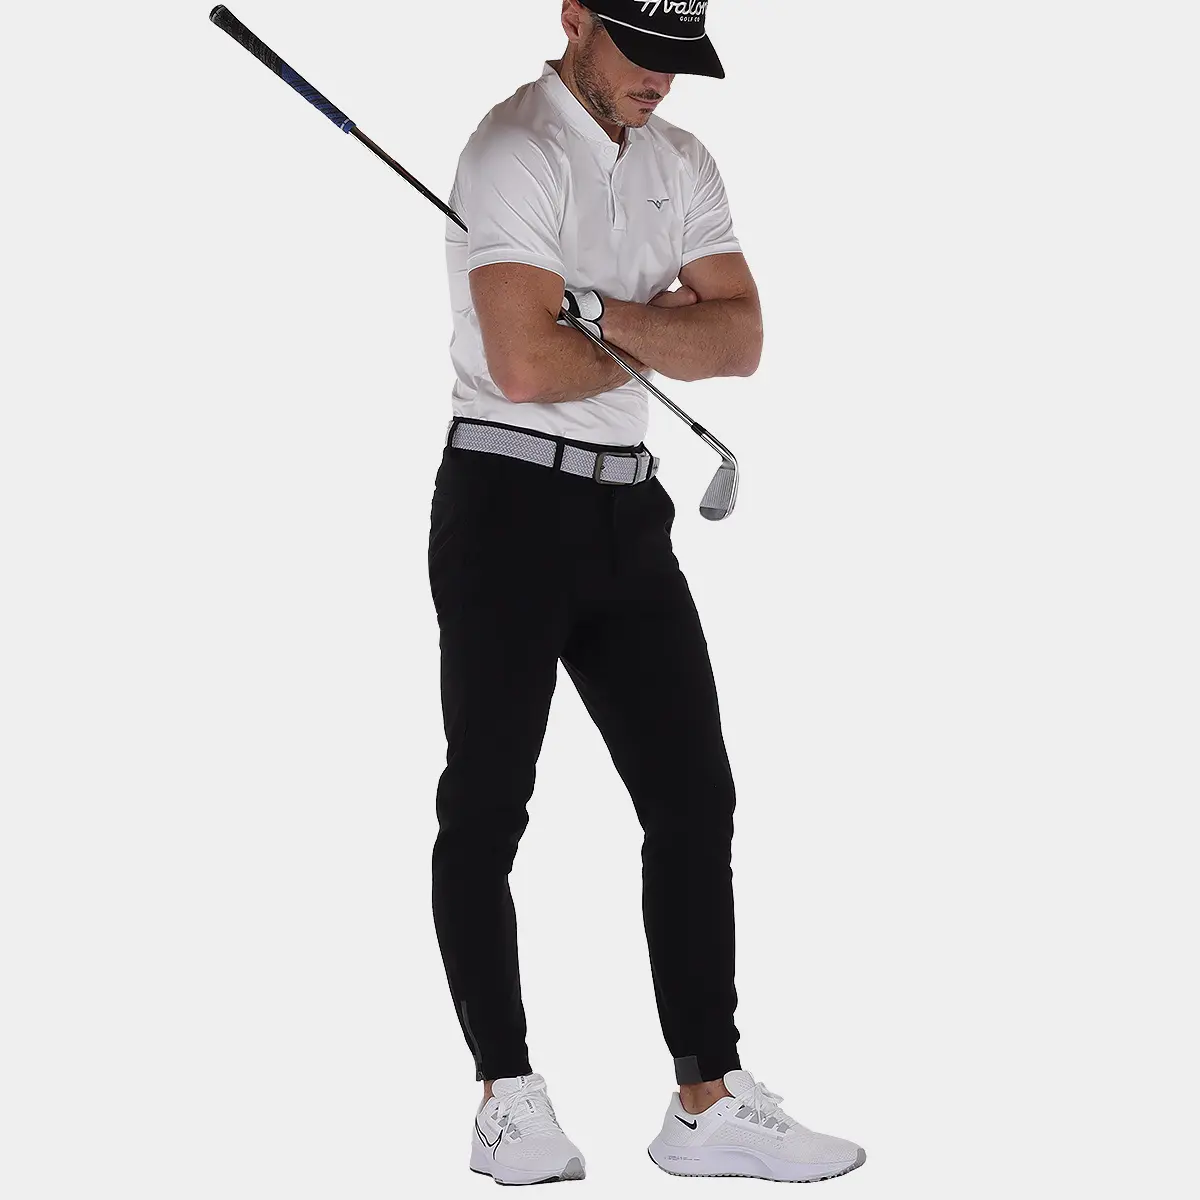 Shop Black Golf Joggers  Modern Mens Golf Pants with Belt Loops